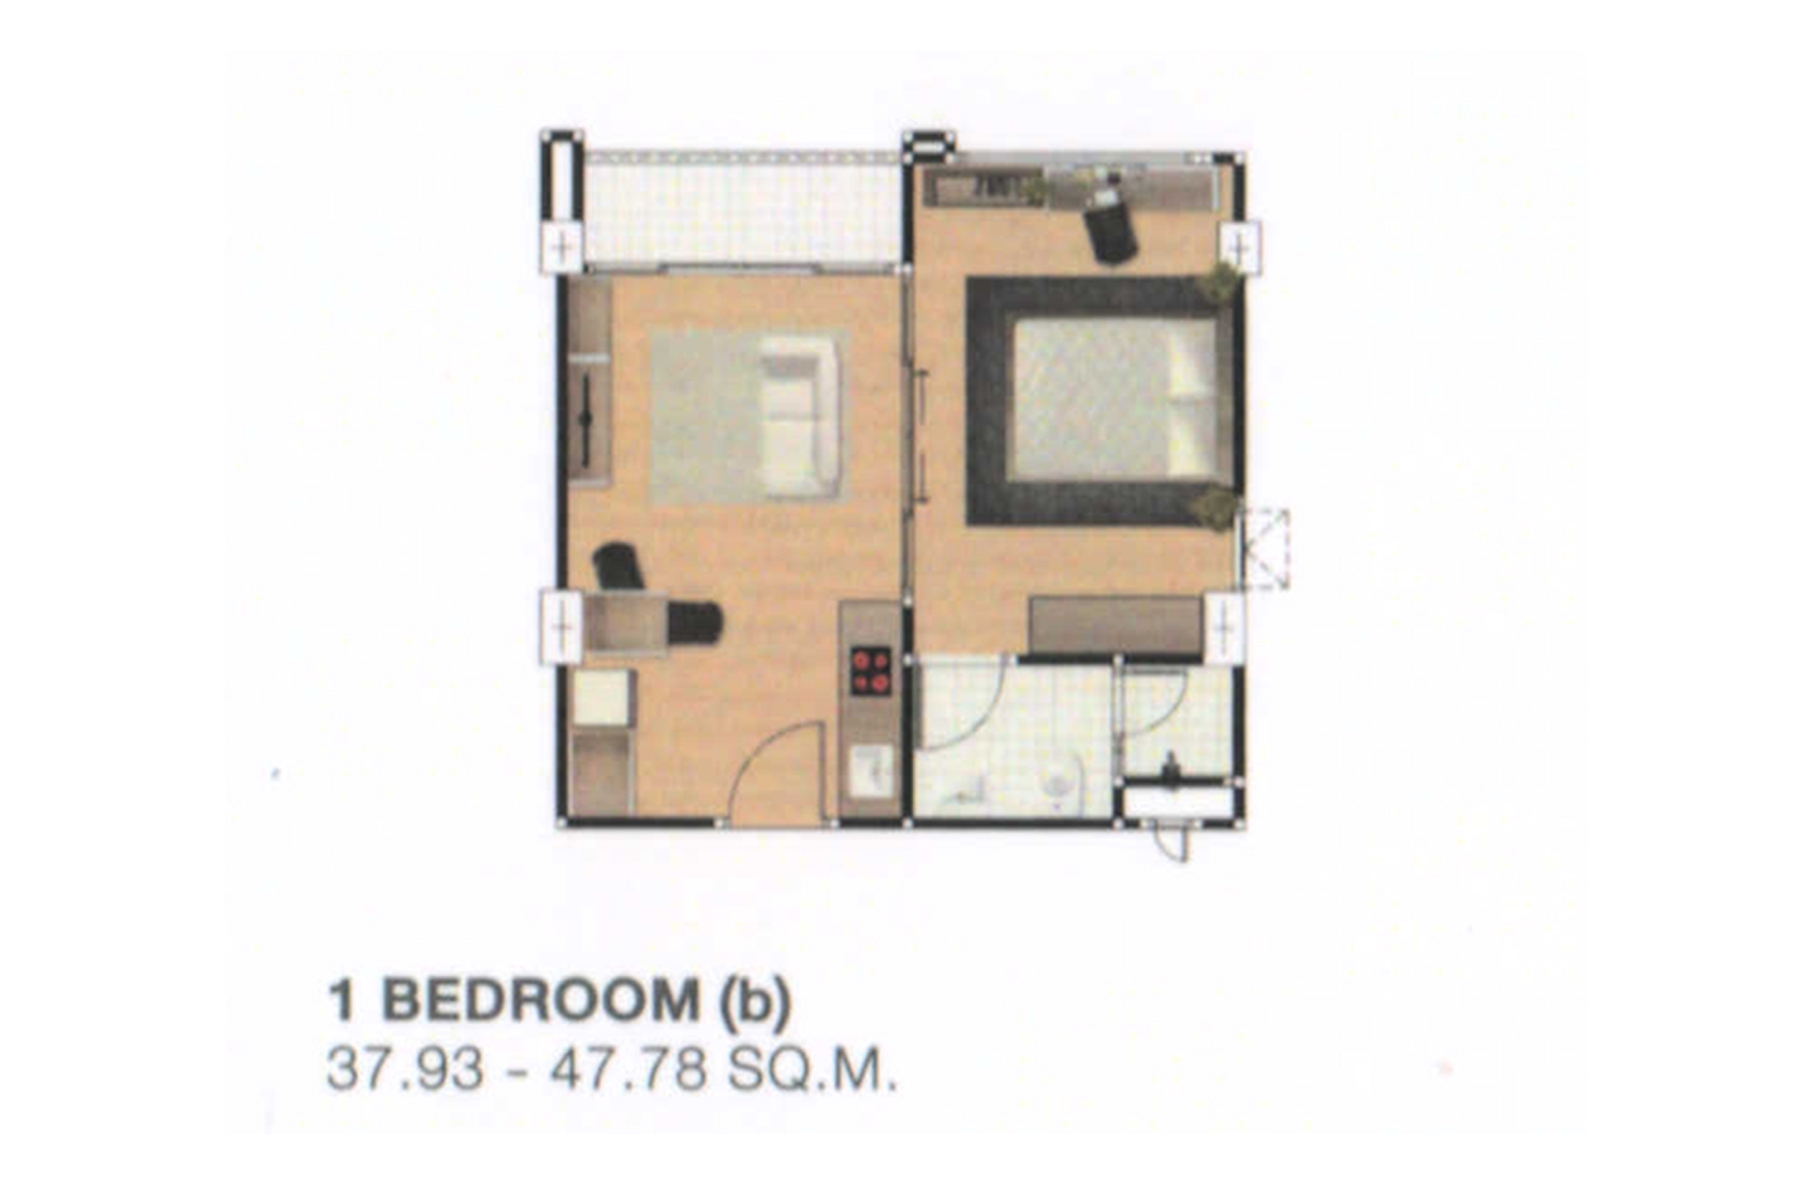 1 Bedroom ในโครงการ ซิตี้ ลิ้งค์ คอนโด, ภาพที่ 2